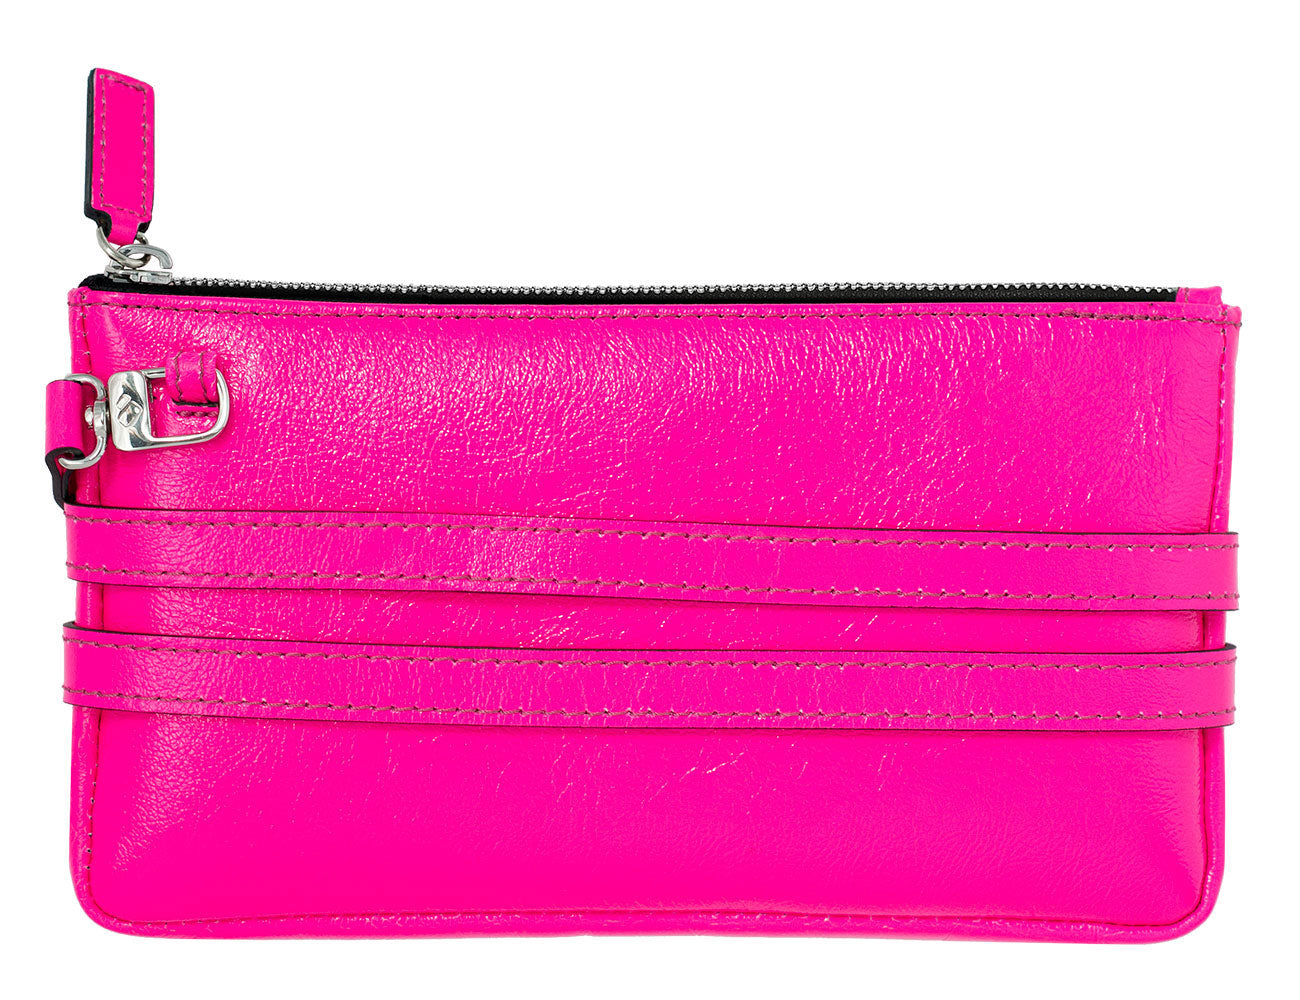 minibag neon pink, Ledertasche neon pink, Clutch neon pink, Rückseite minibag, Geldtasche neon pink